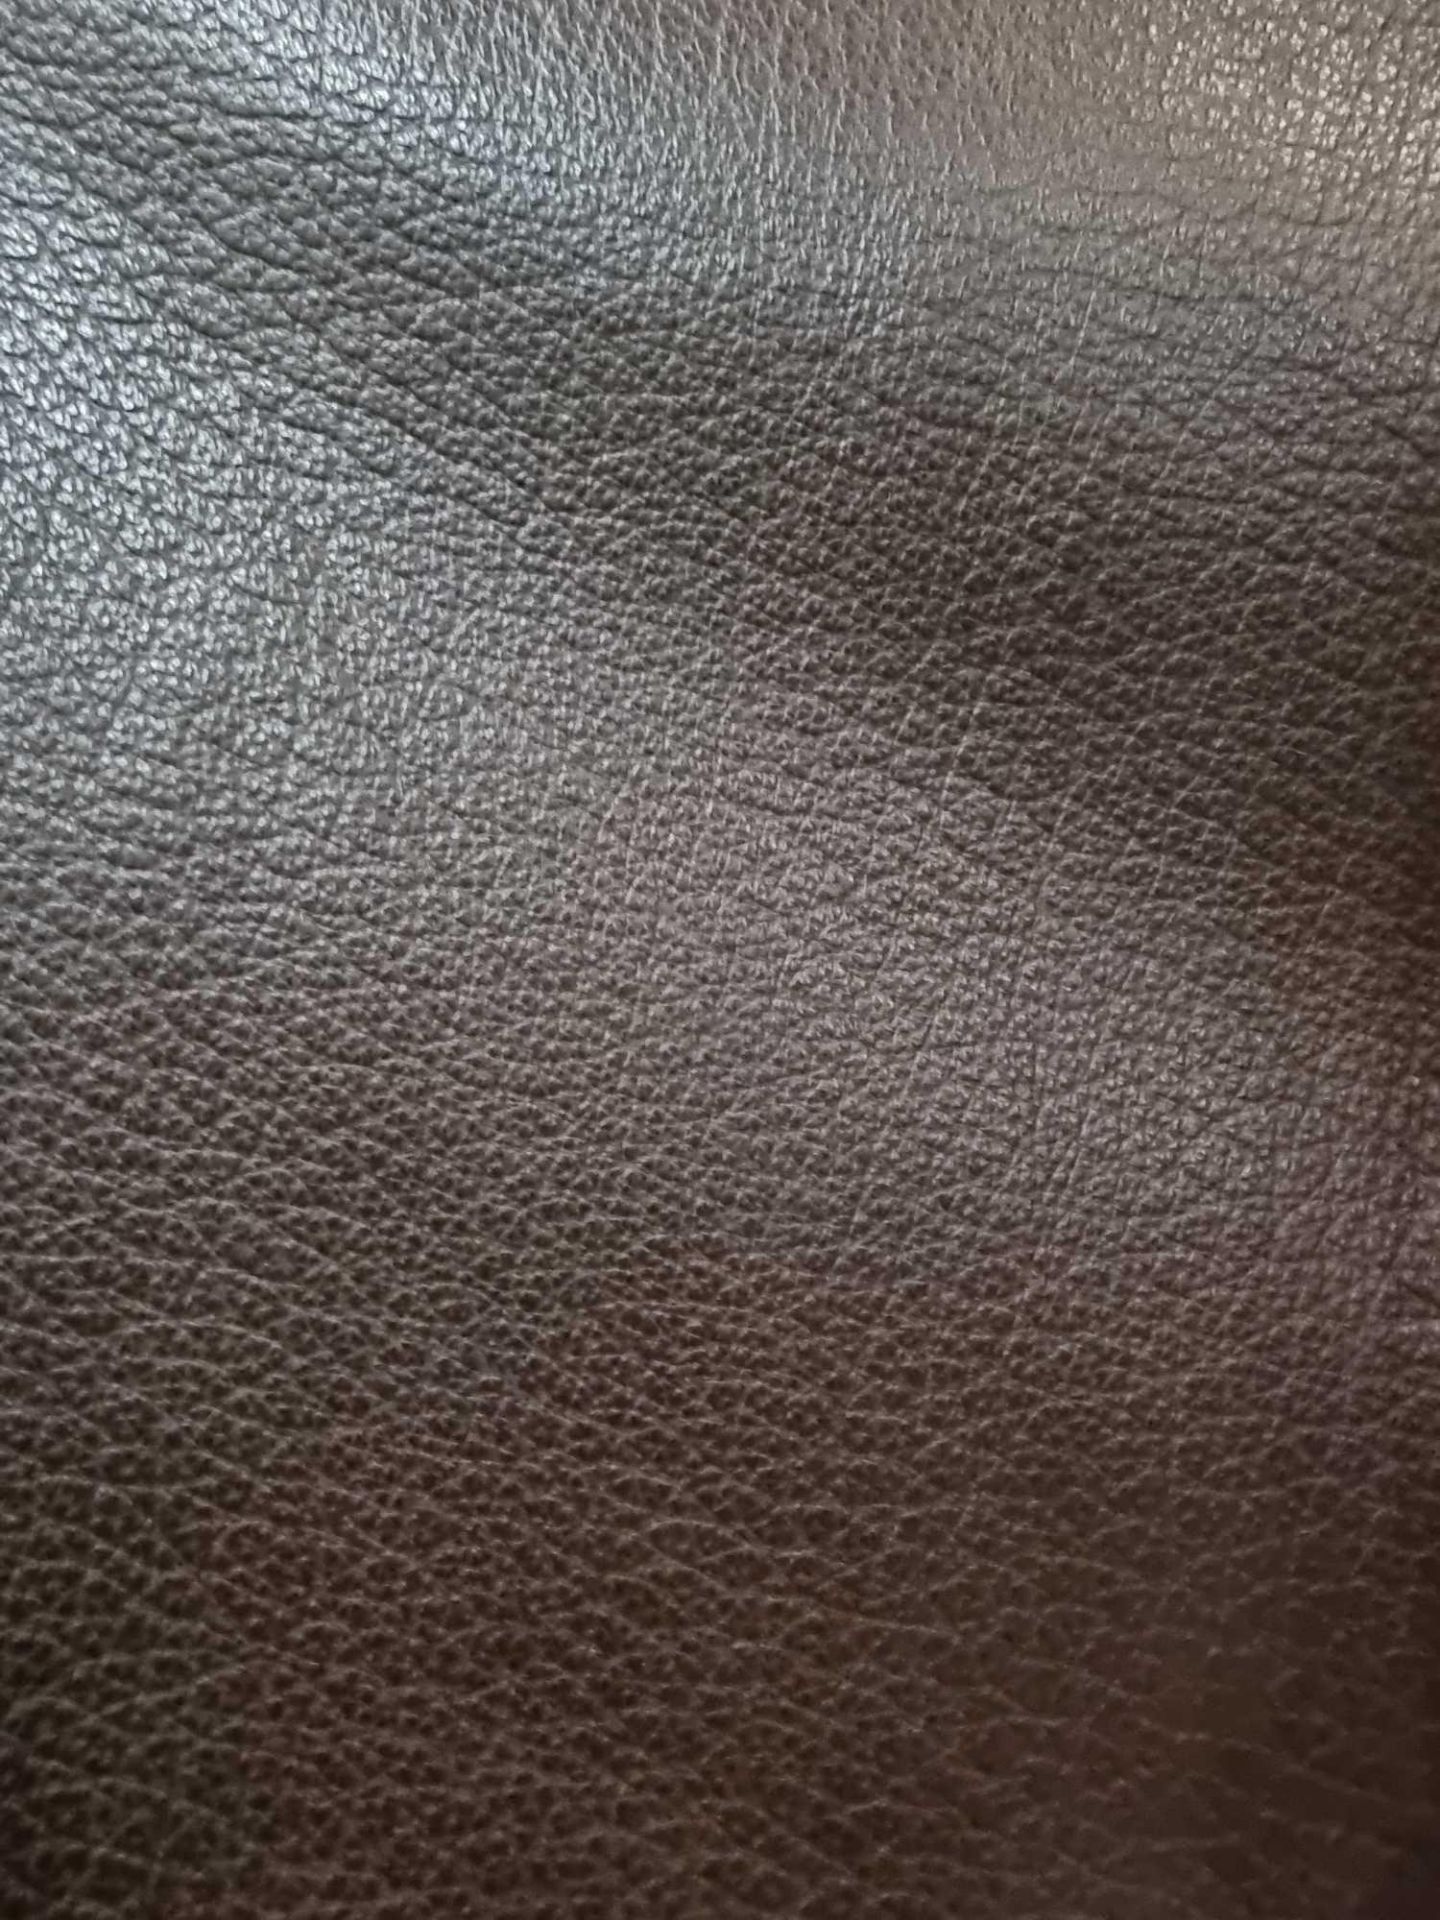 Mastrotto Hudson Chocolate Leather Hide approximately 4.18mÂ² 2.2 x 1.9cm ( Hide No,259) - Bild 2 aus 2